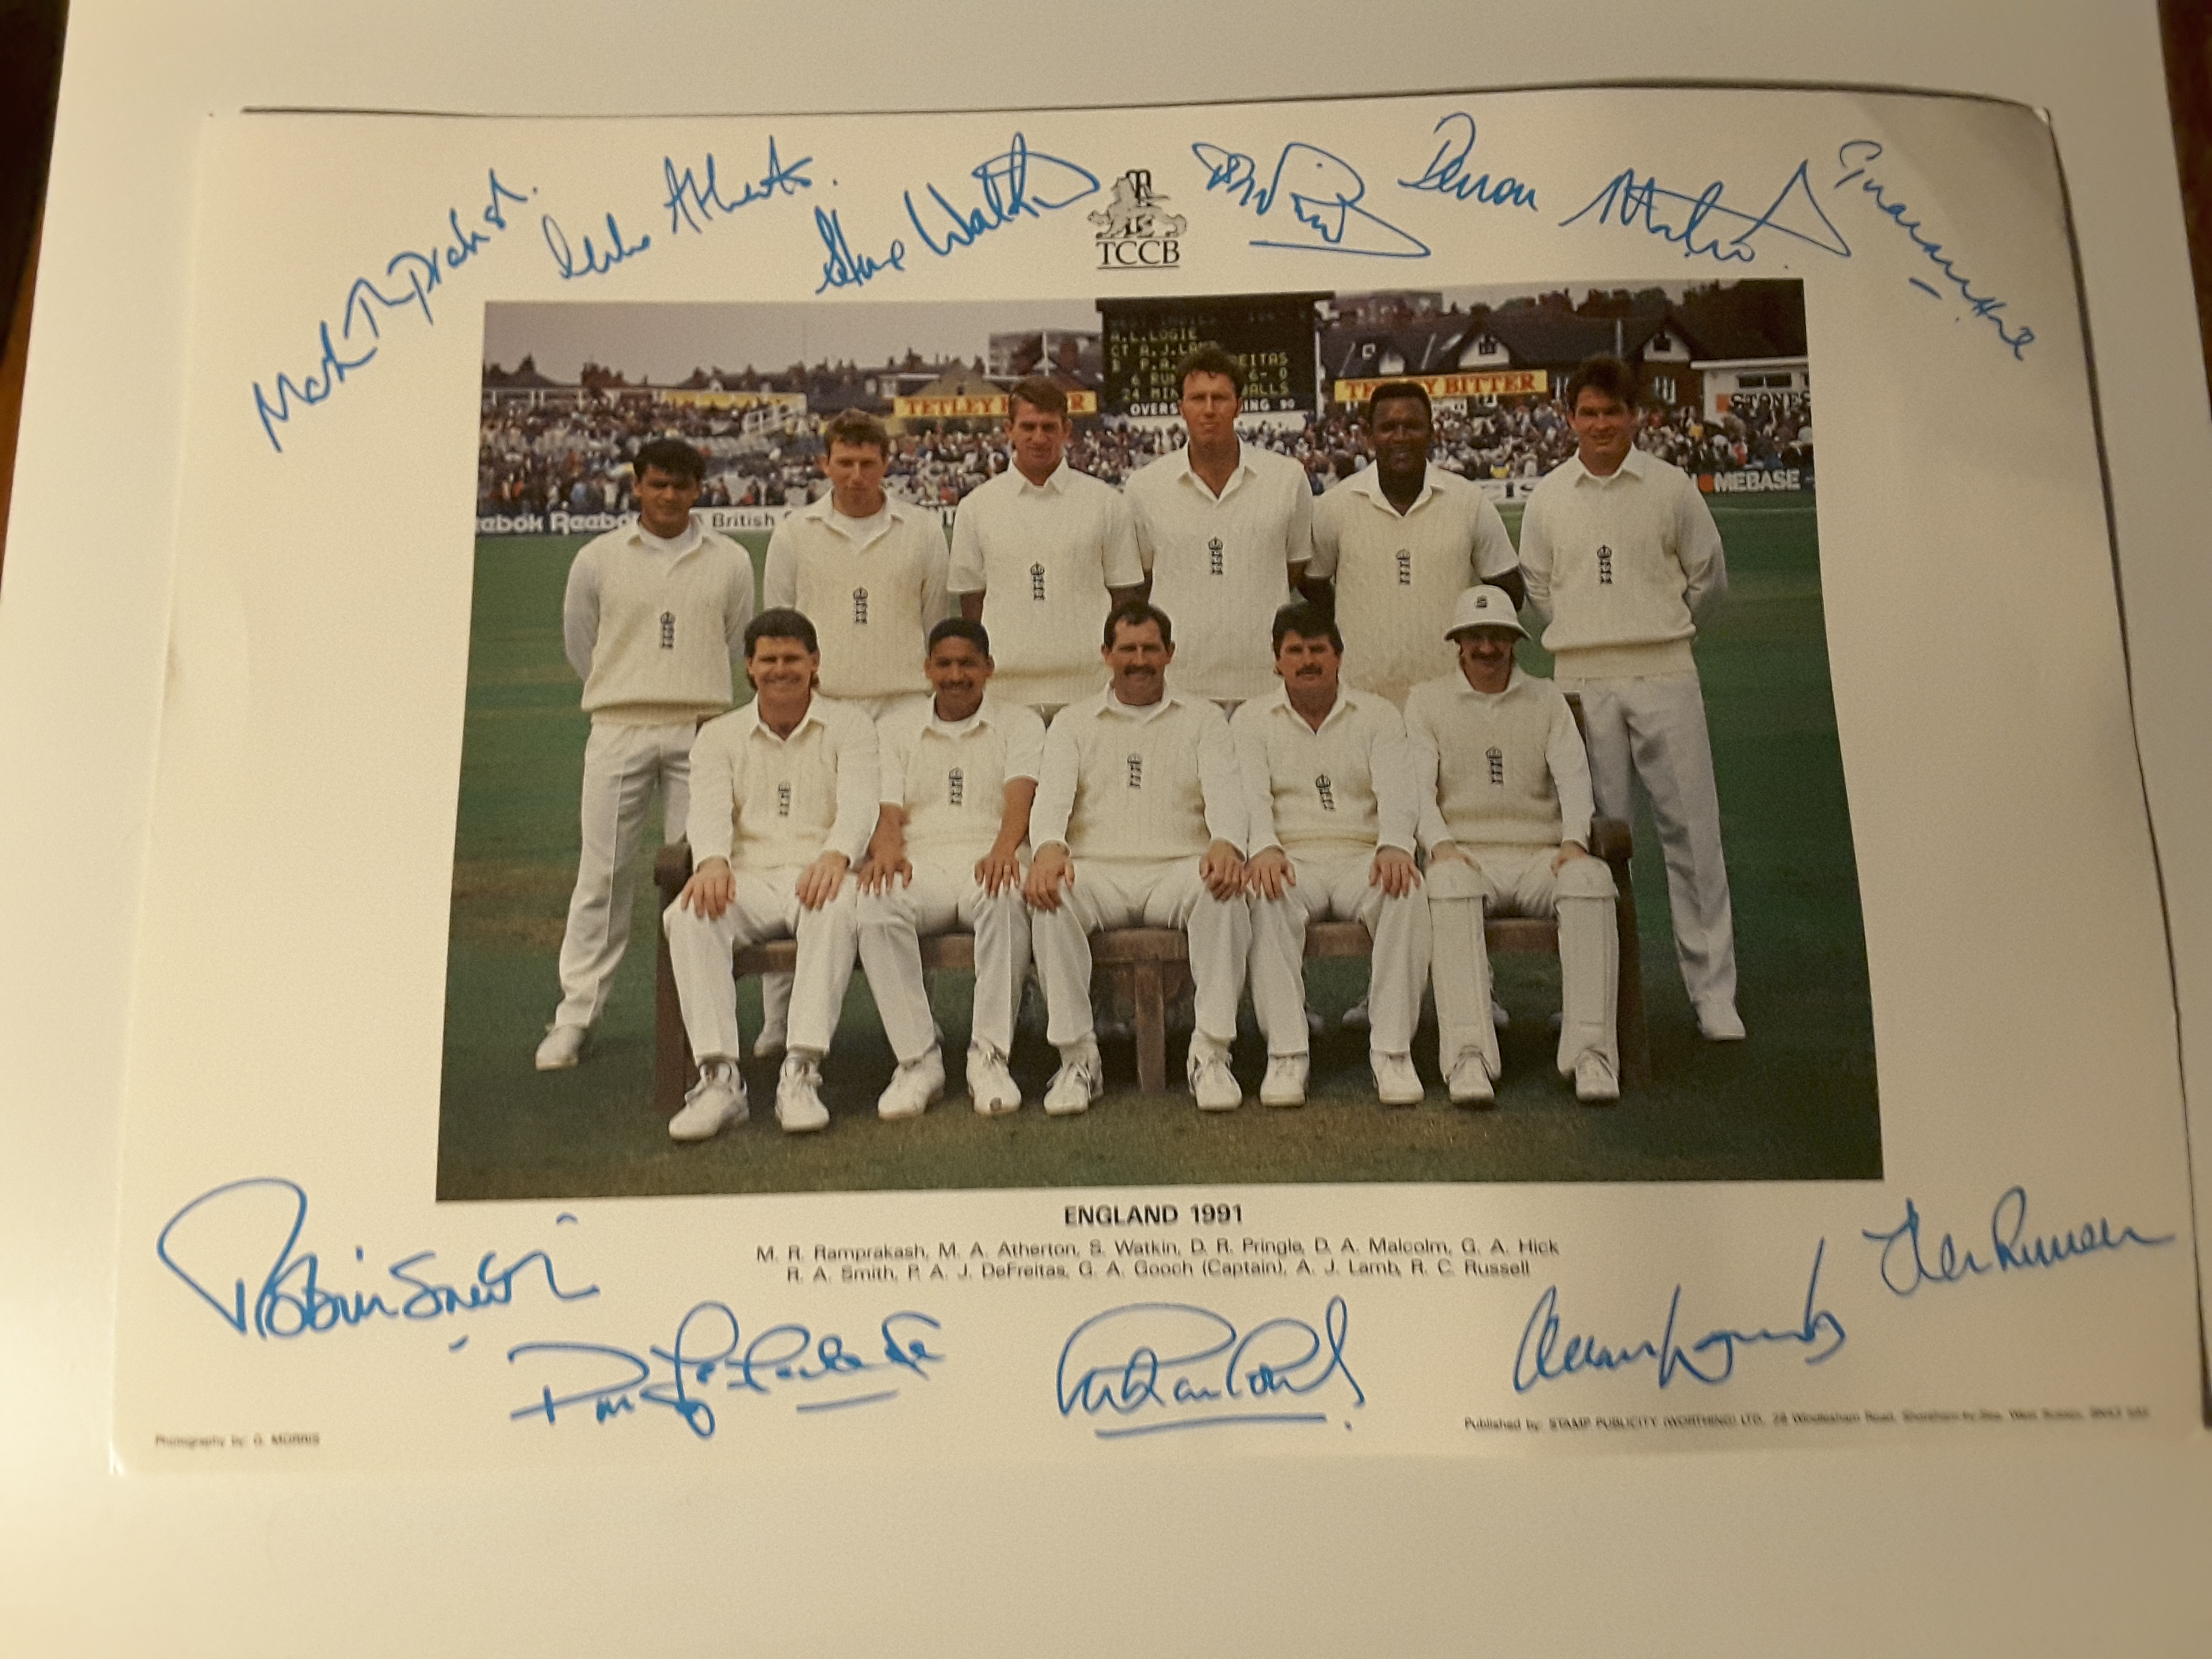 1991 England Cricket Team Photo - Image 3 of 3